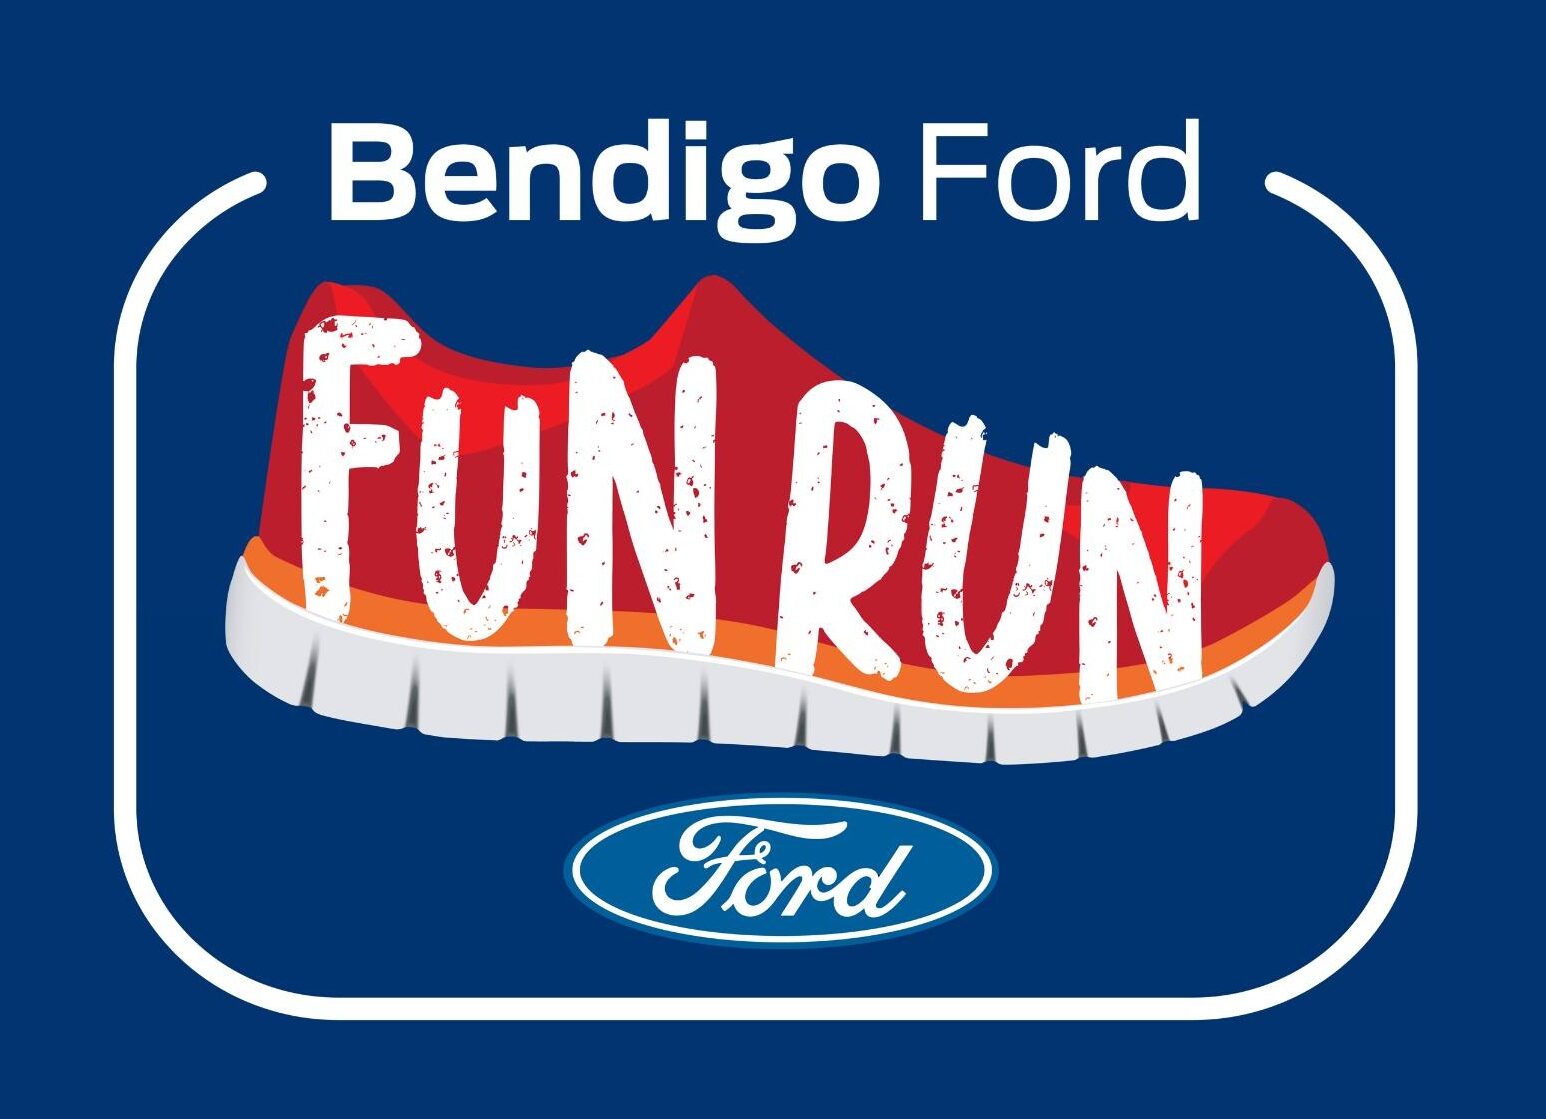 Bendigo Ford Fun Run